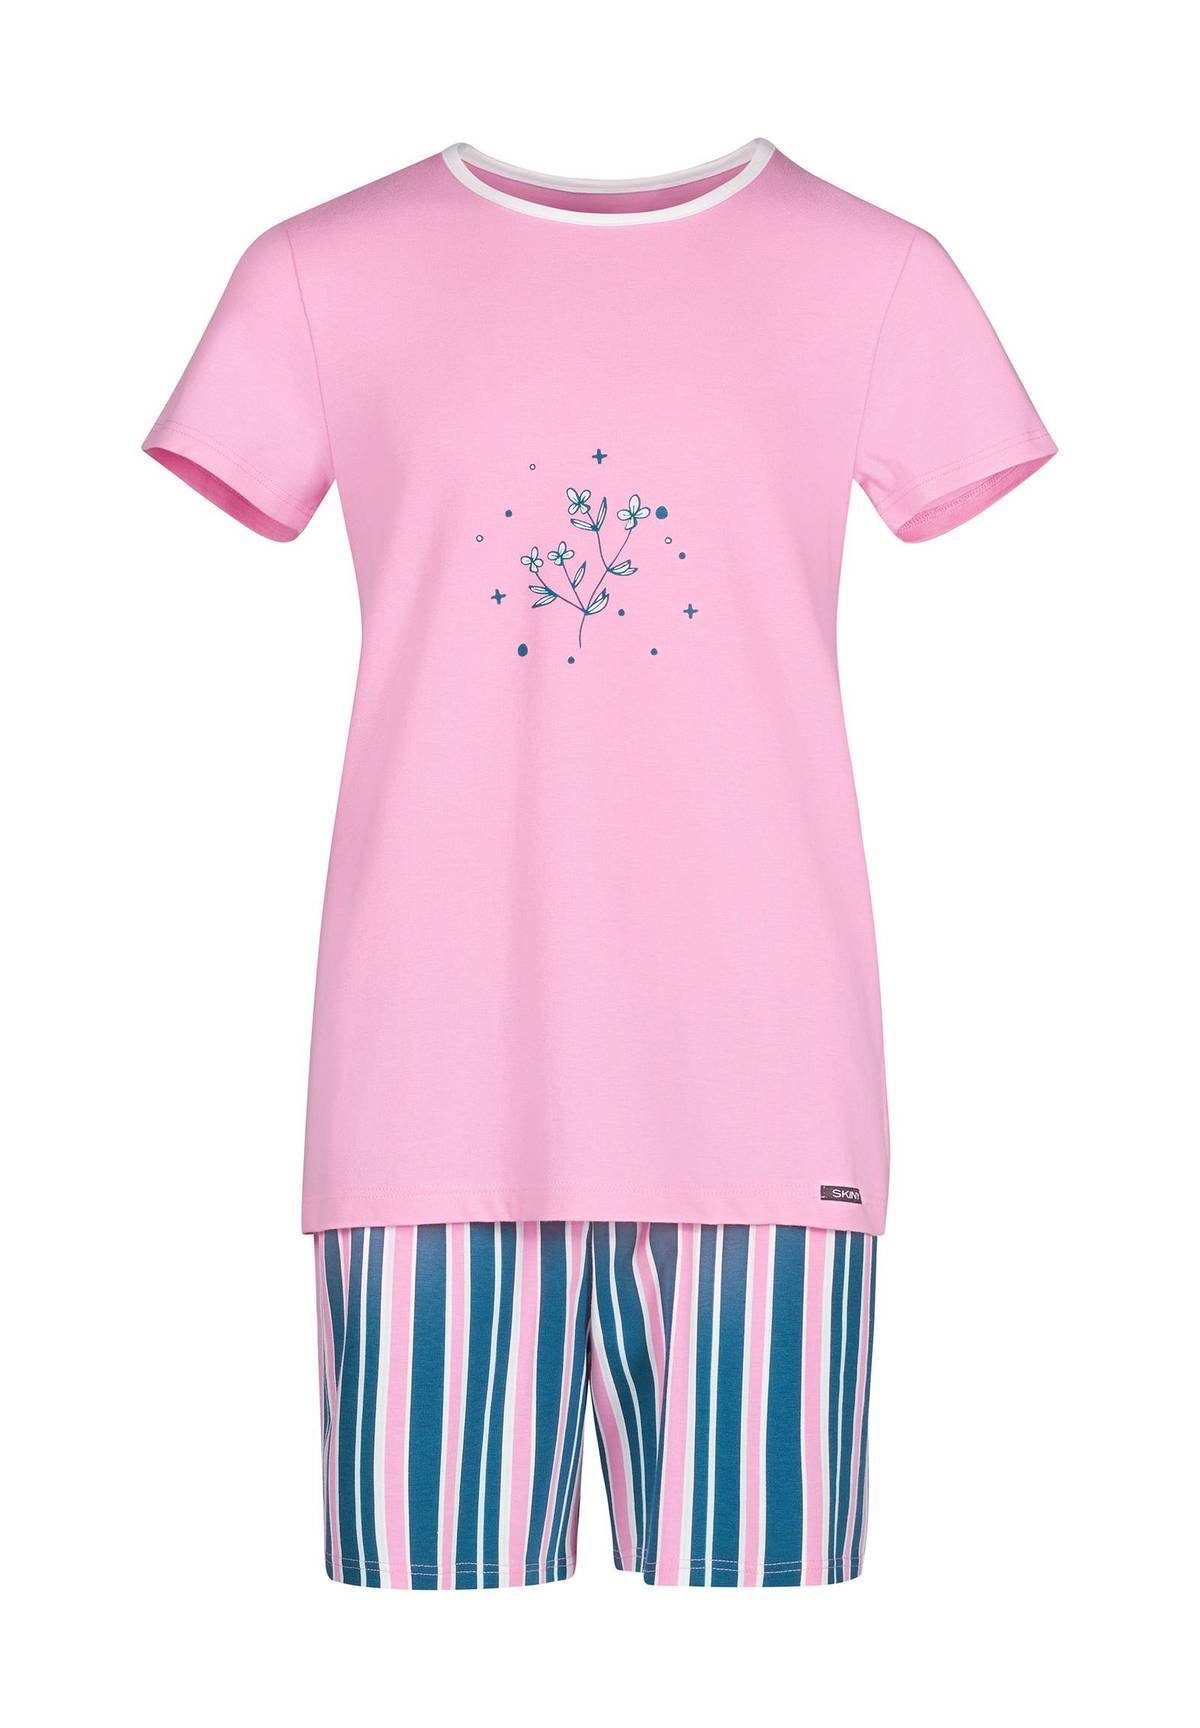 Skiny Pyjama Mädchen Schlafanzug Set - kurz, Kinder, 2-tlg. Pink/Blau